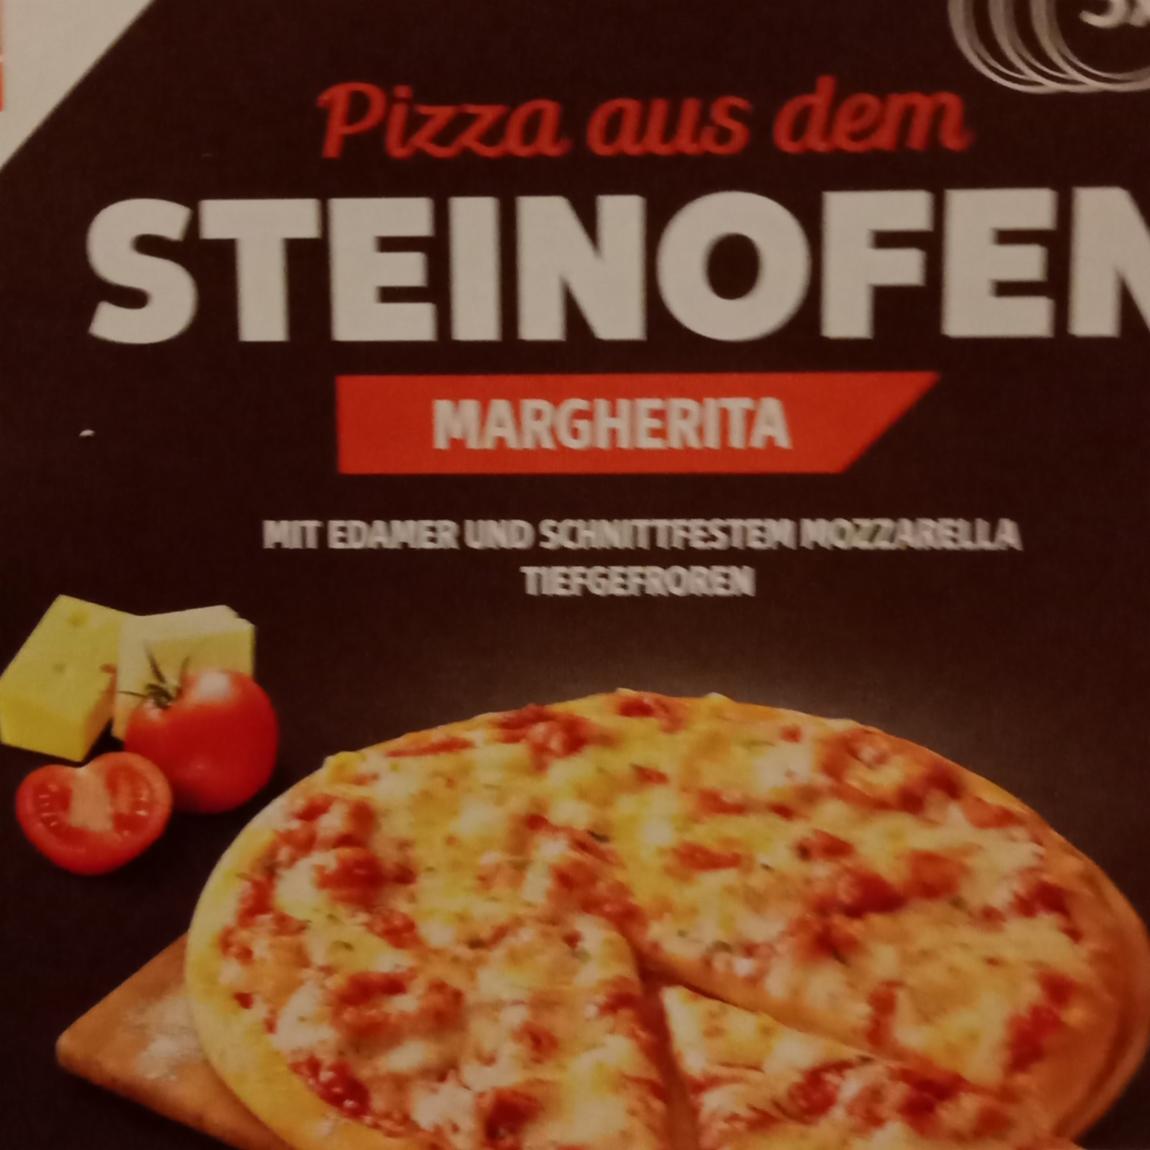 Fotografie - Pizza aus dem Steinofen Margherita K-Classic